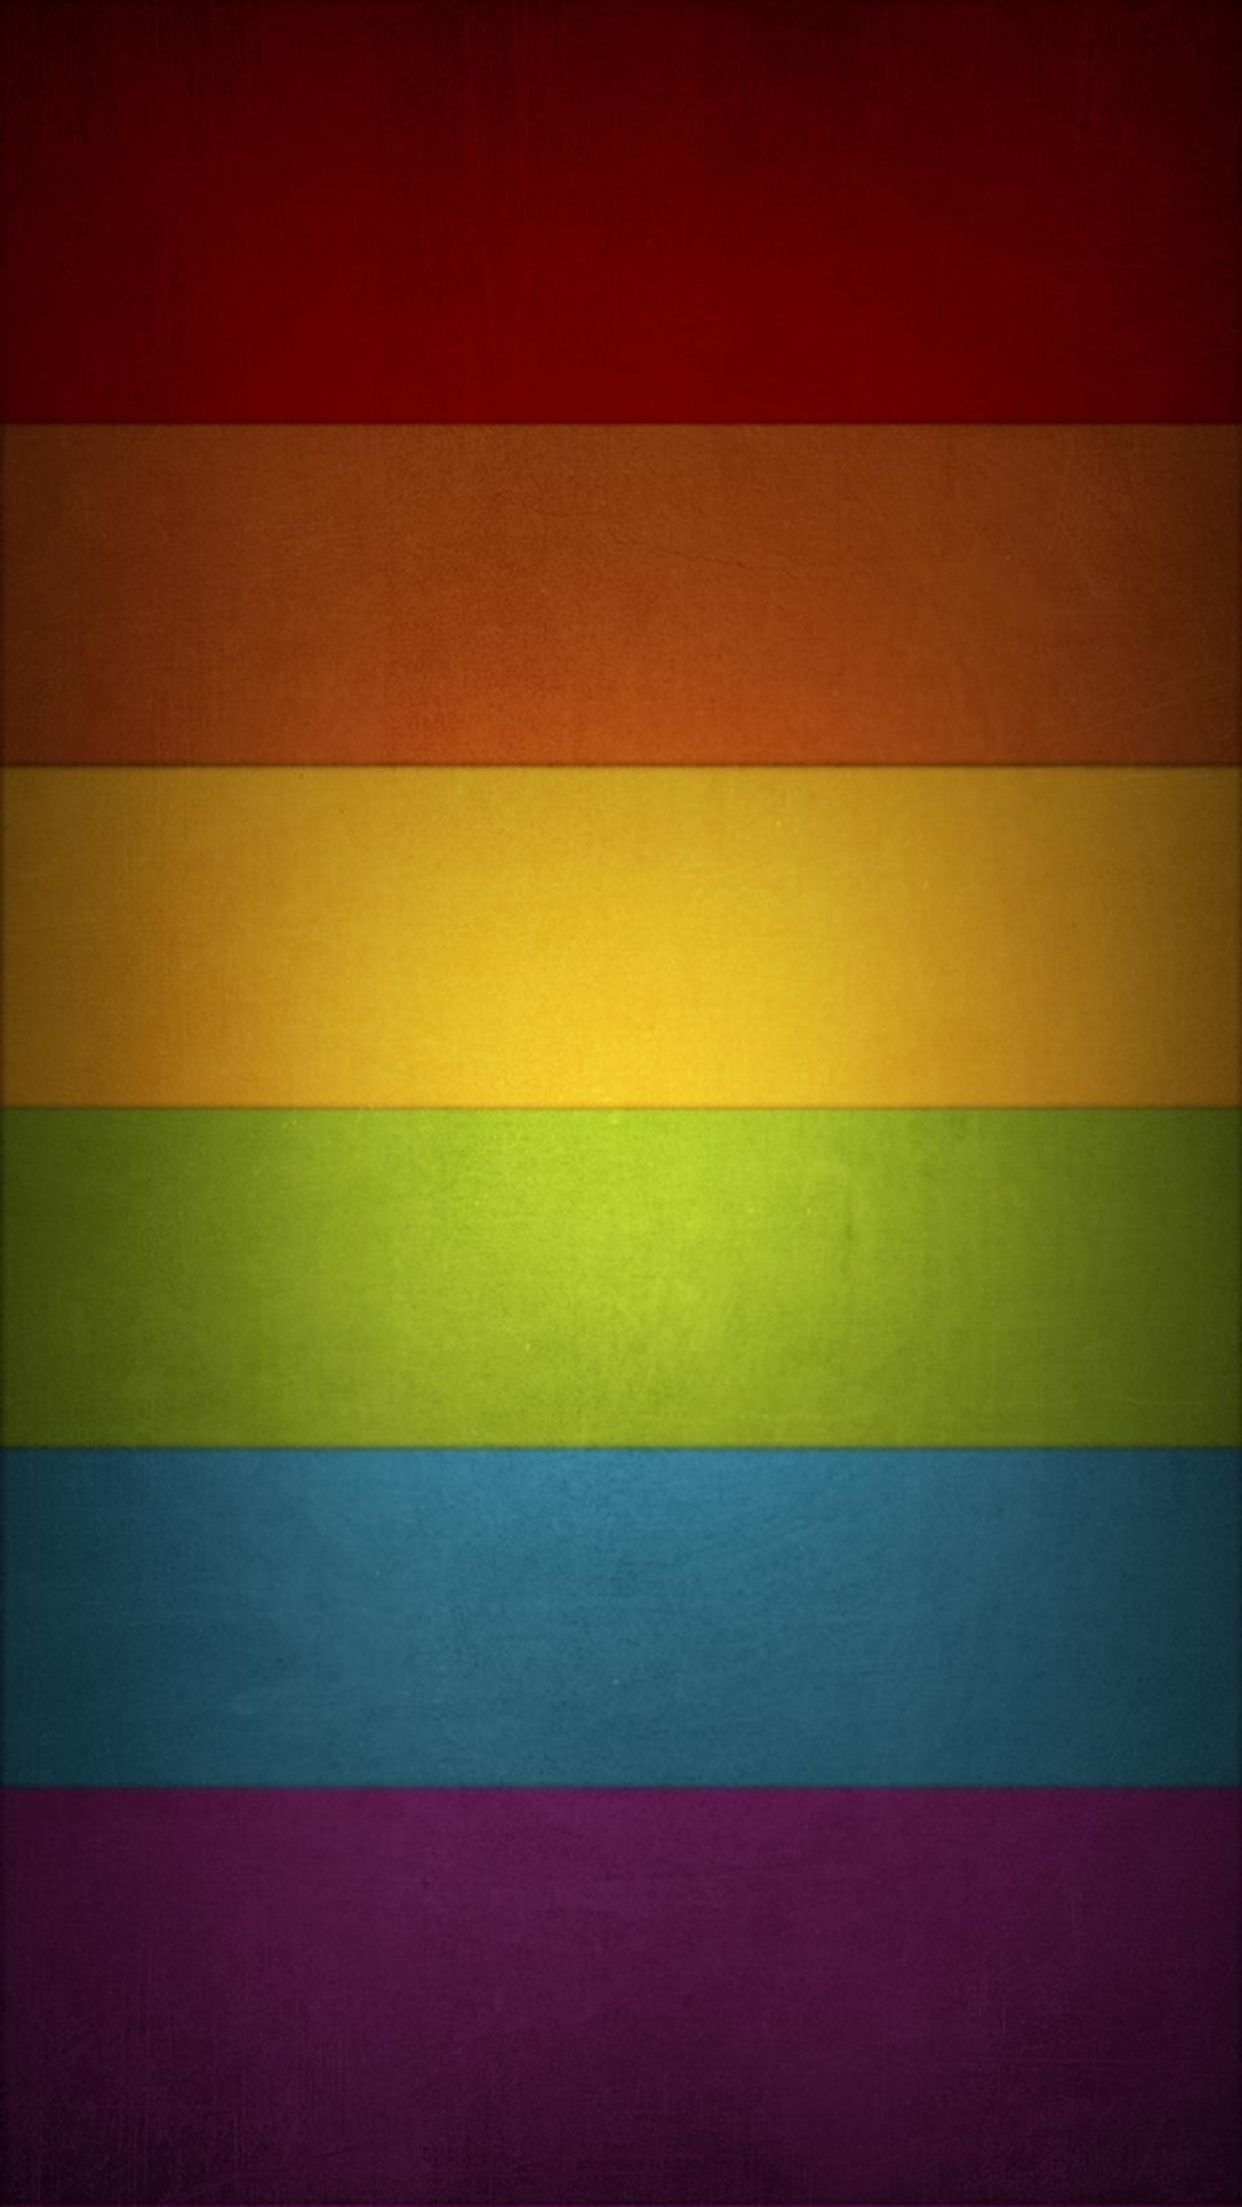 Pride iPhone Wallpaper Free Pride iPhone Background